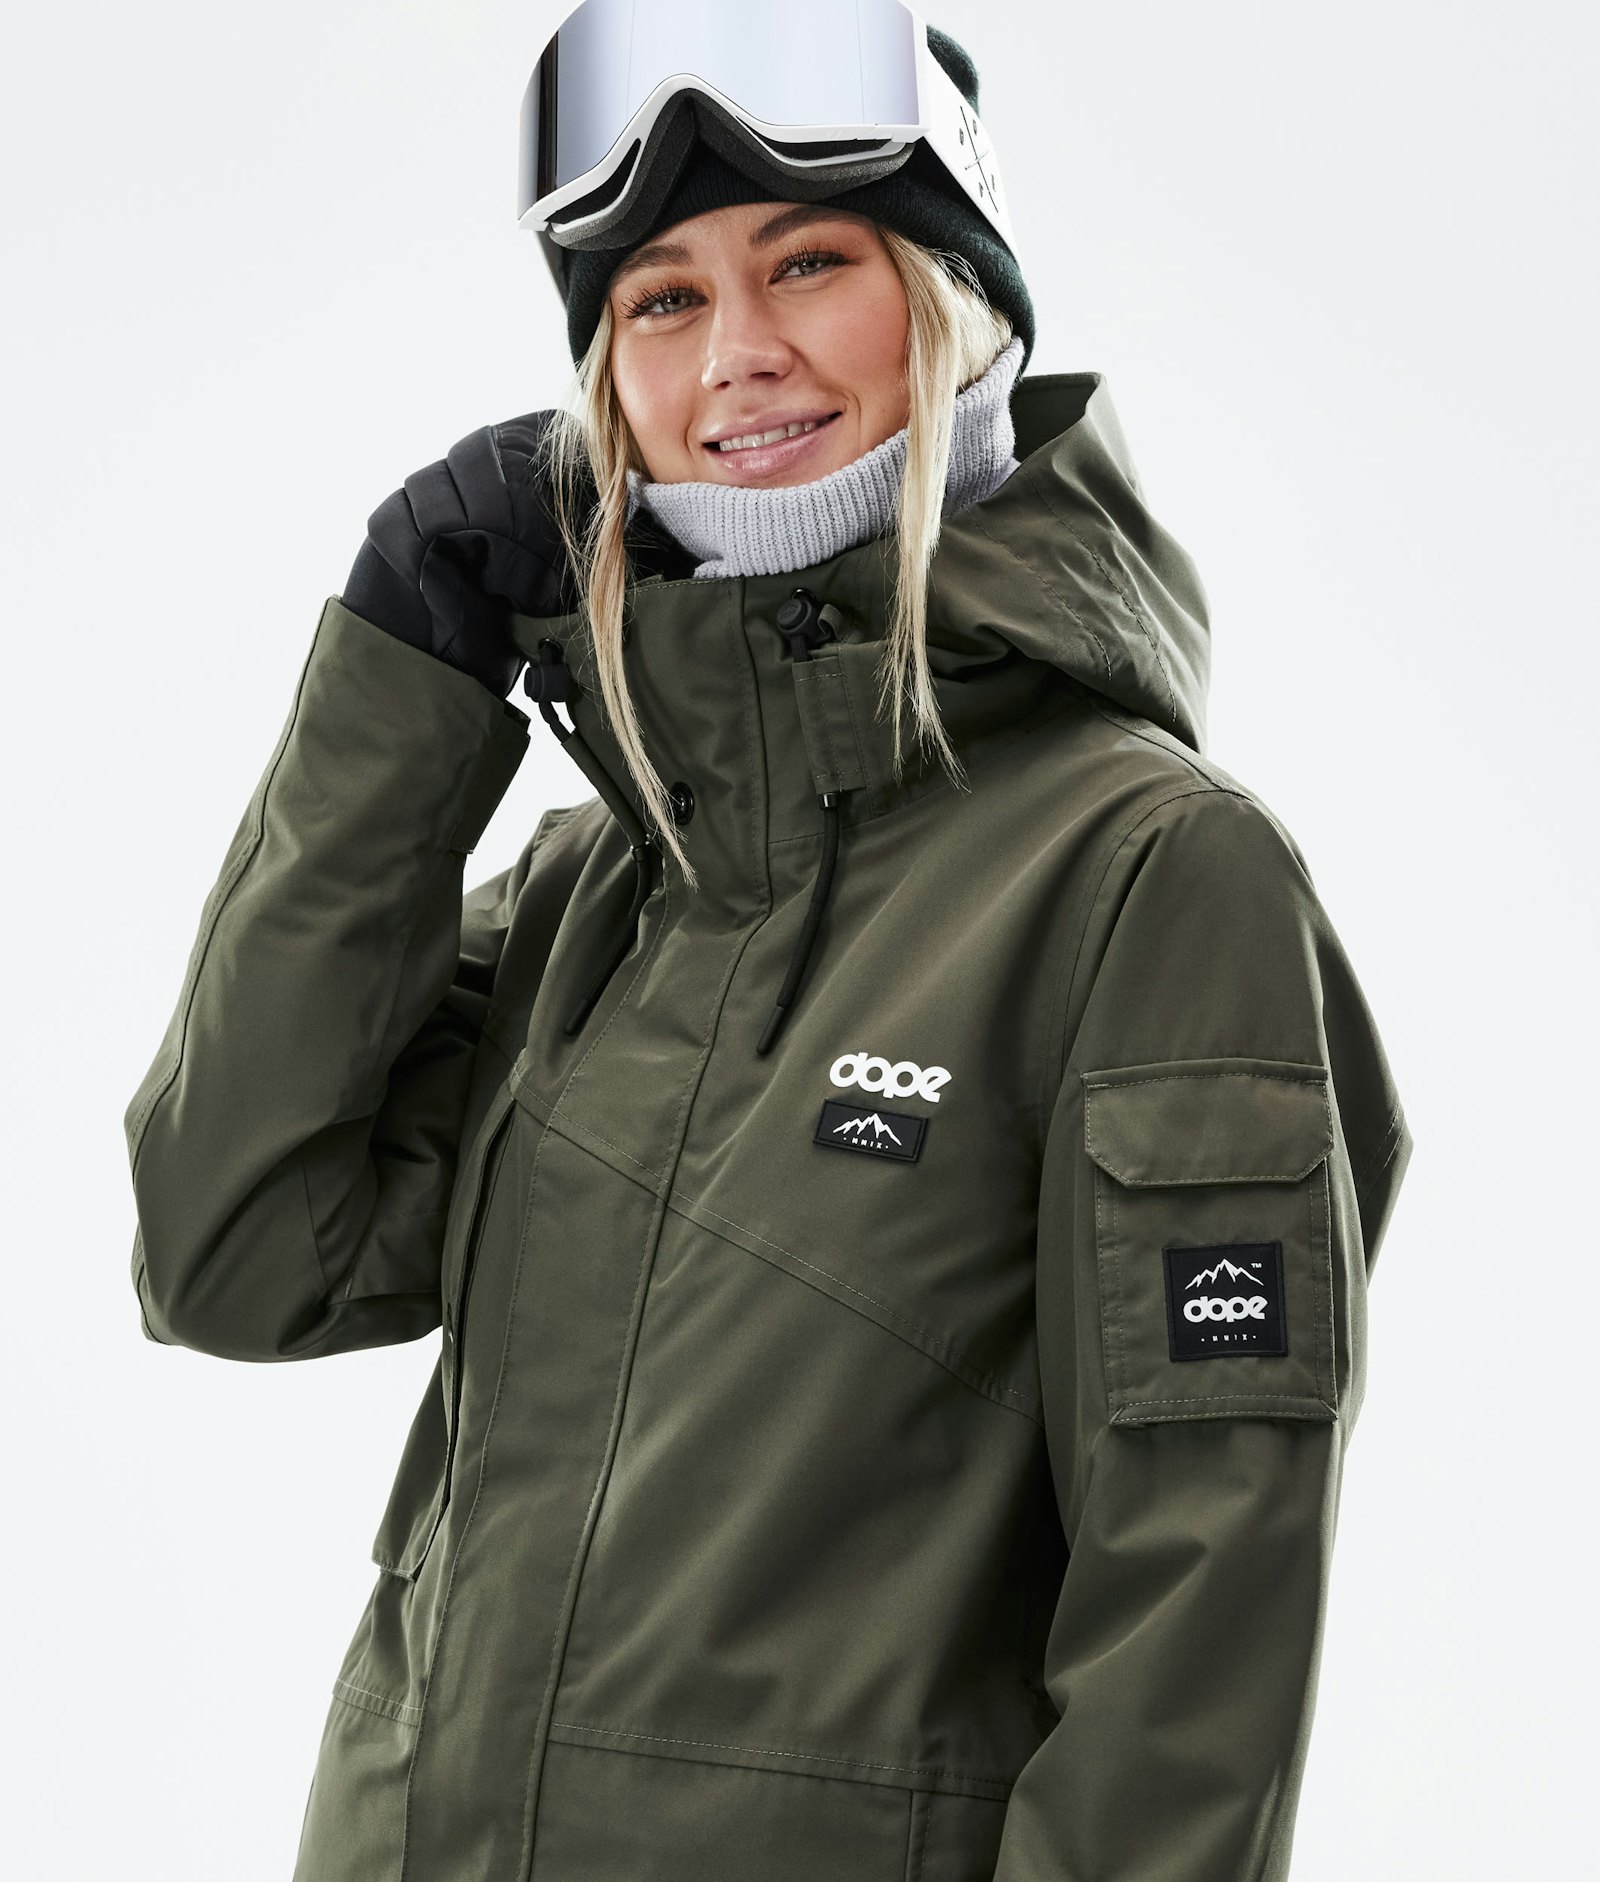 Adept W 2021 Ski Jacket Women Olive Green